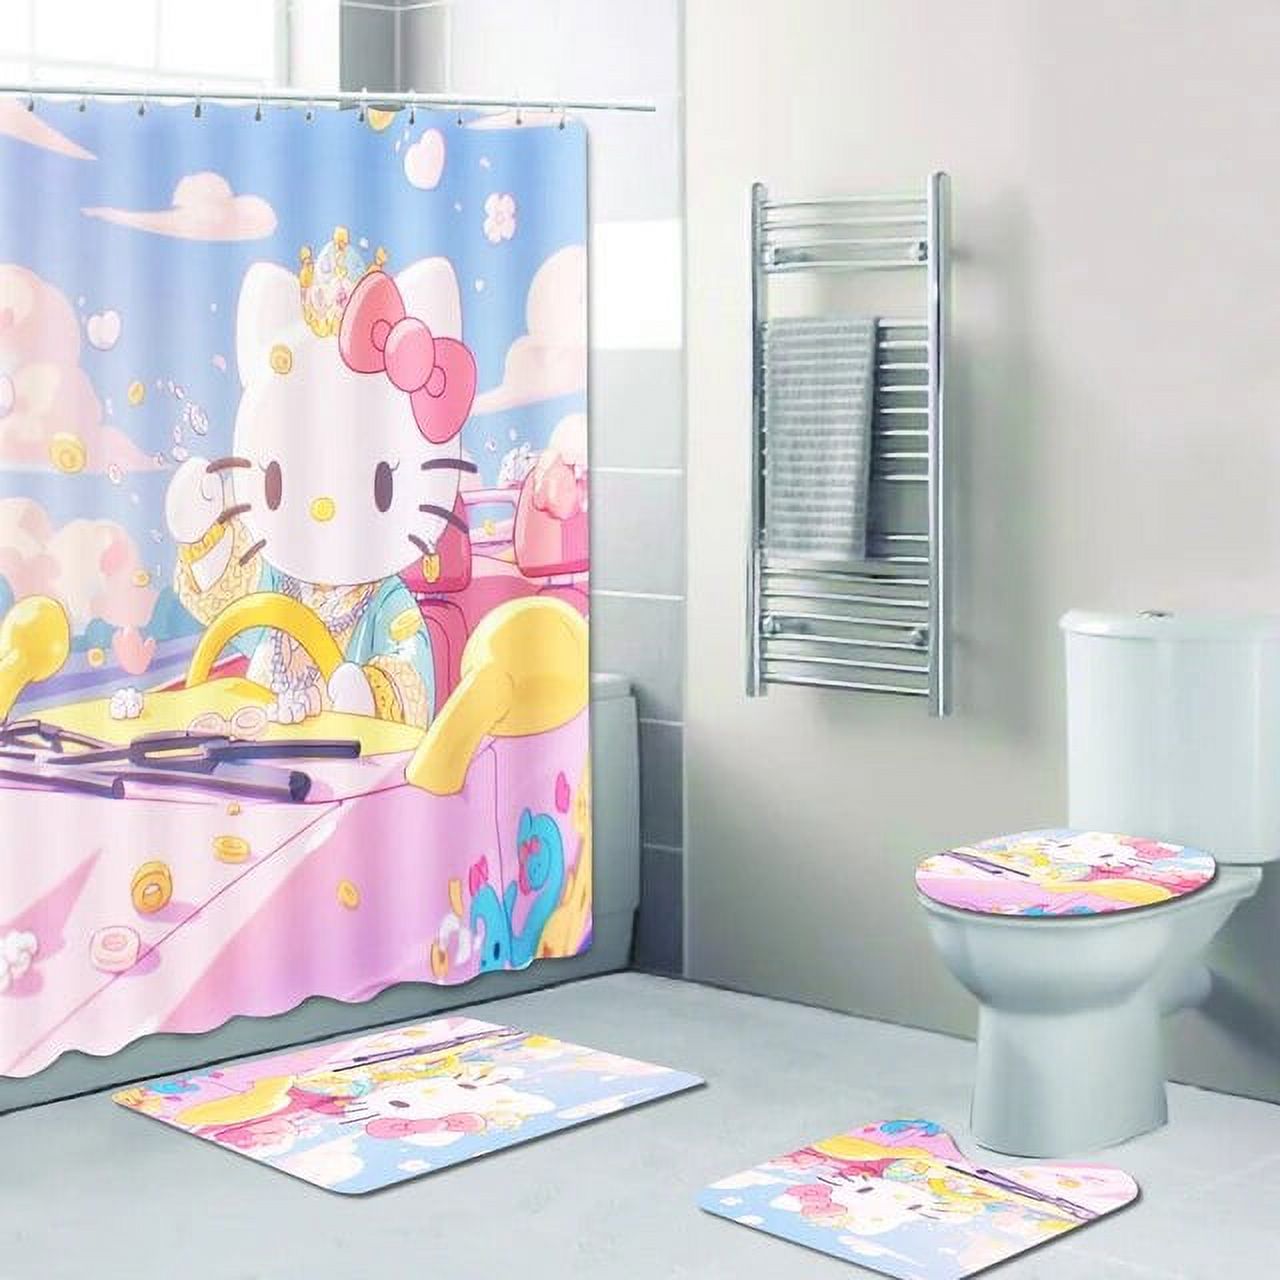 Jiayi Hello Kitty Cartoon Bathroom Mats Sanrio Curtain Bath Items Decorations And Shower Sets Full Set Accessories Anime 4 Piece - image 5 of 6